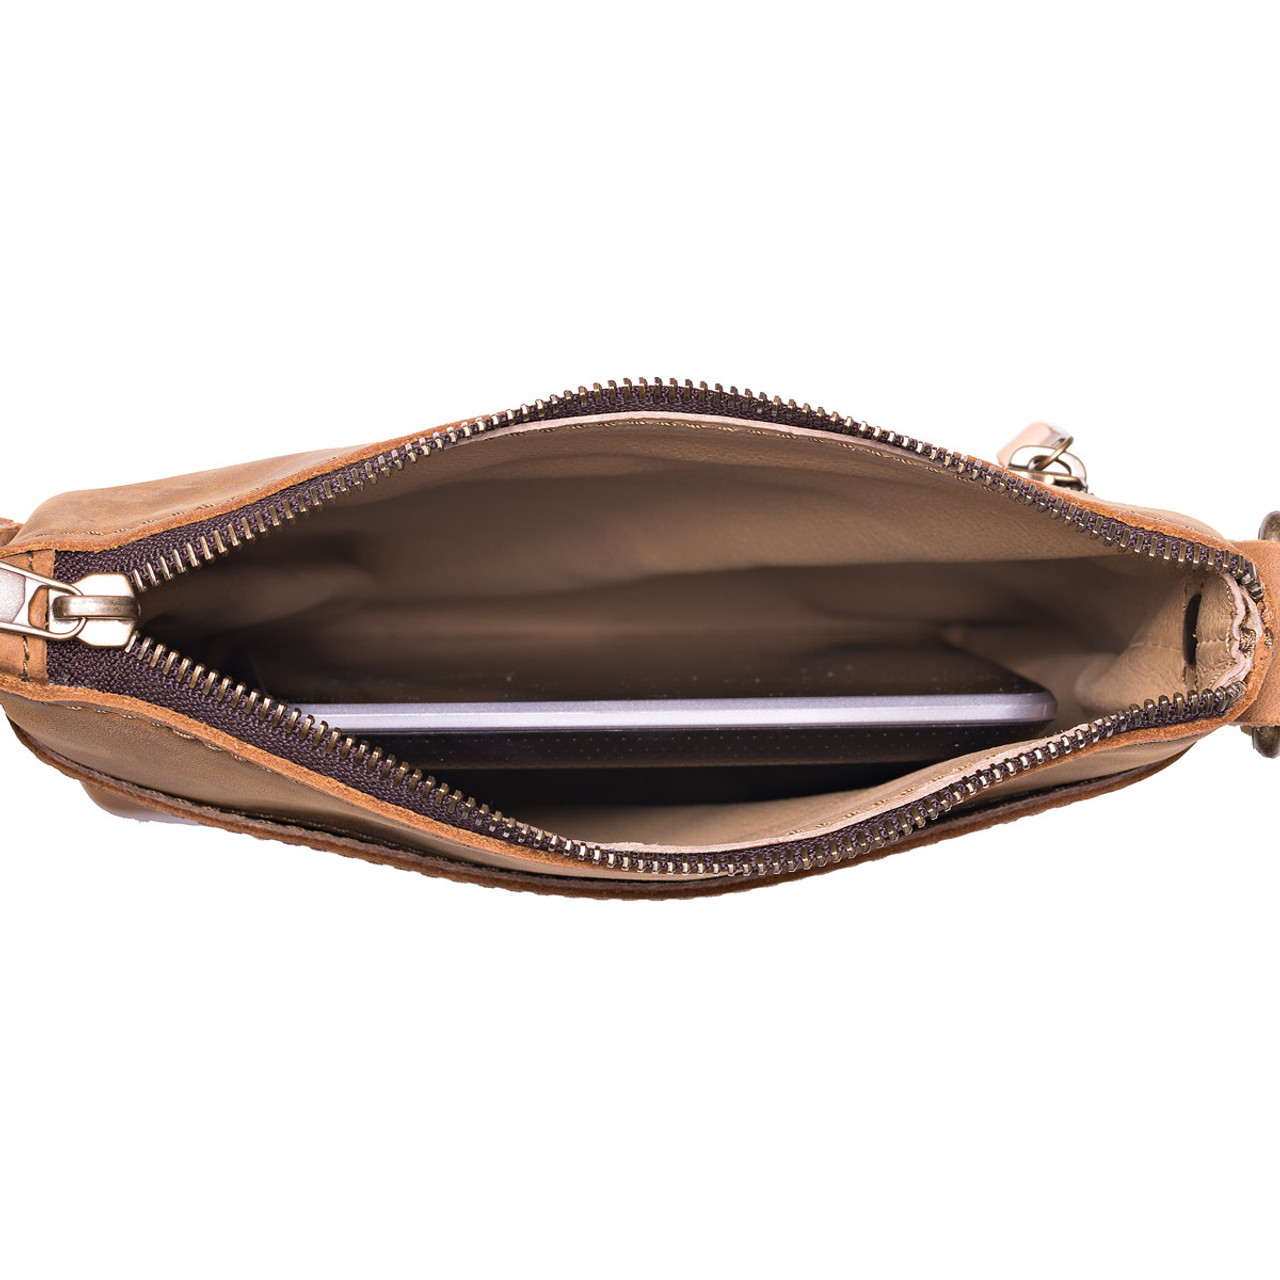 Emg6305 Zipper Luxury Leather Change Purses Pouch Wallet